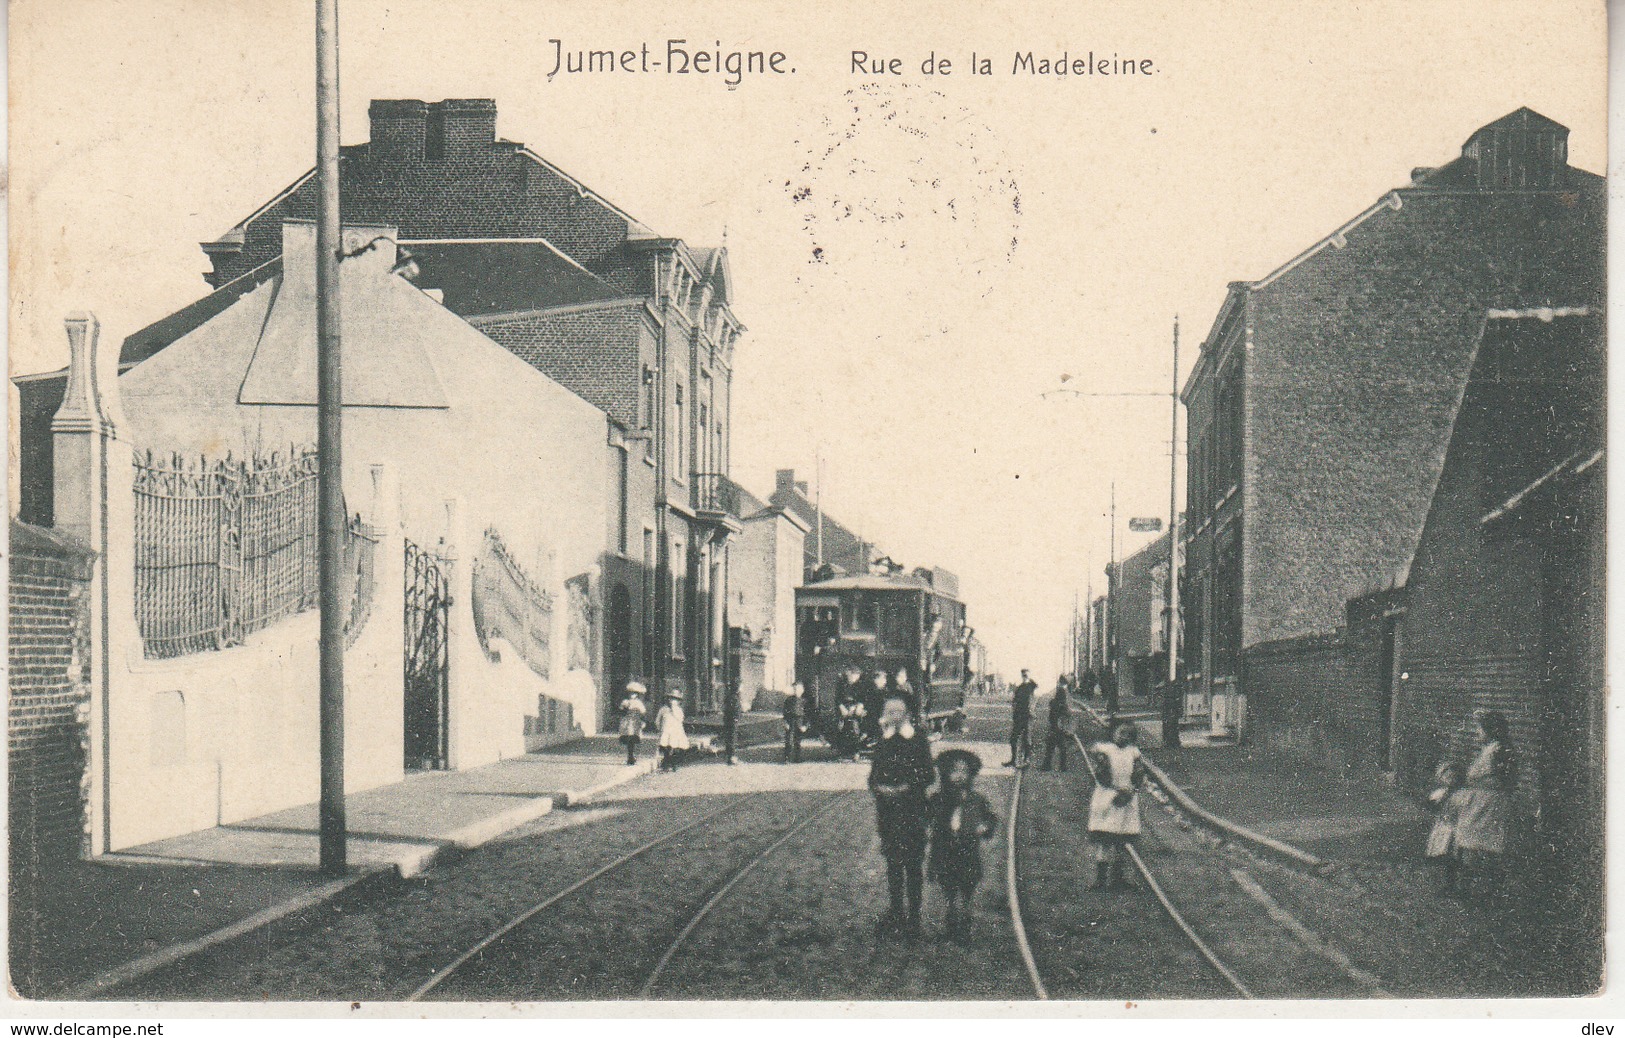 Jumet-Heigne - Rue De La Madeleine - Animé - Transport - 1910 - Edit. Pierre Hesdain, Jumet - Charleroi